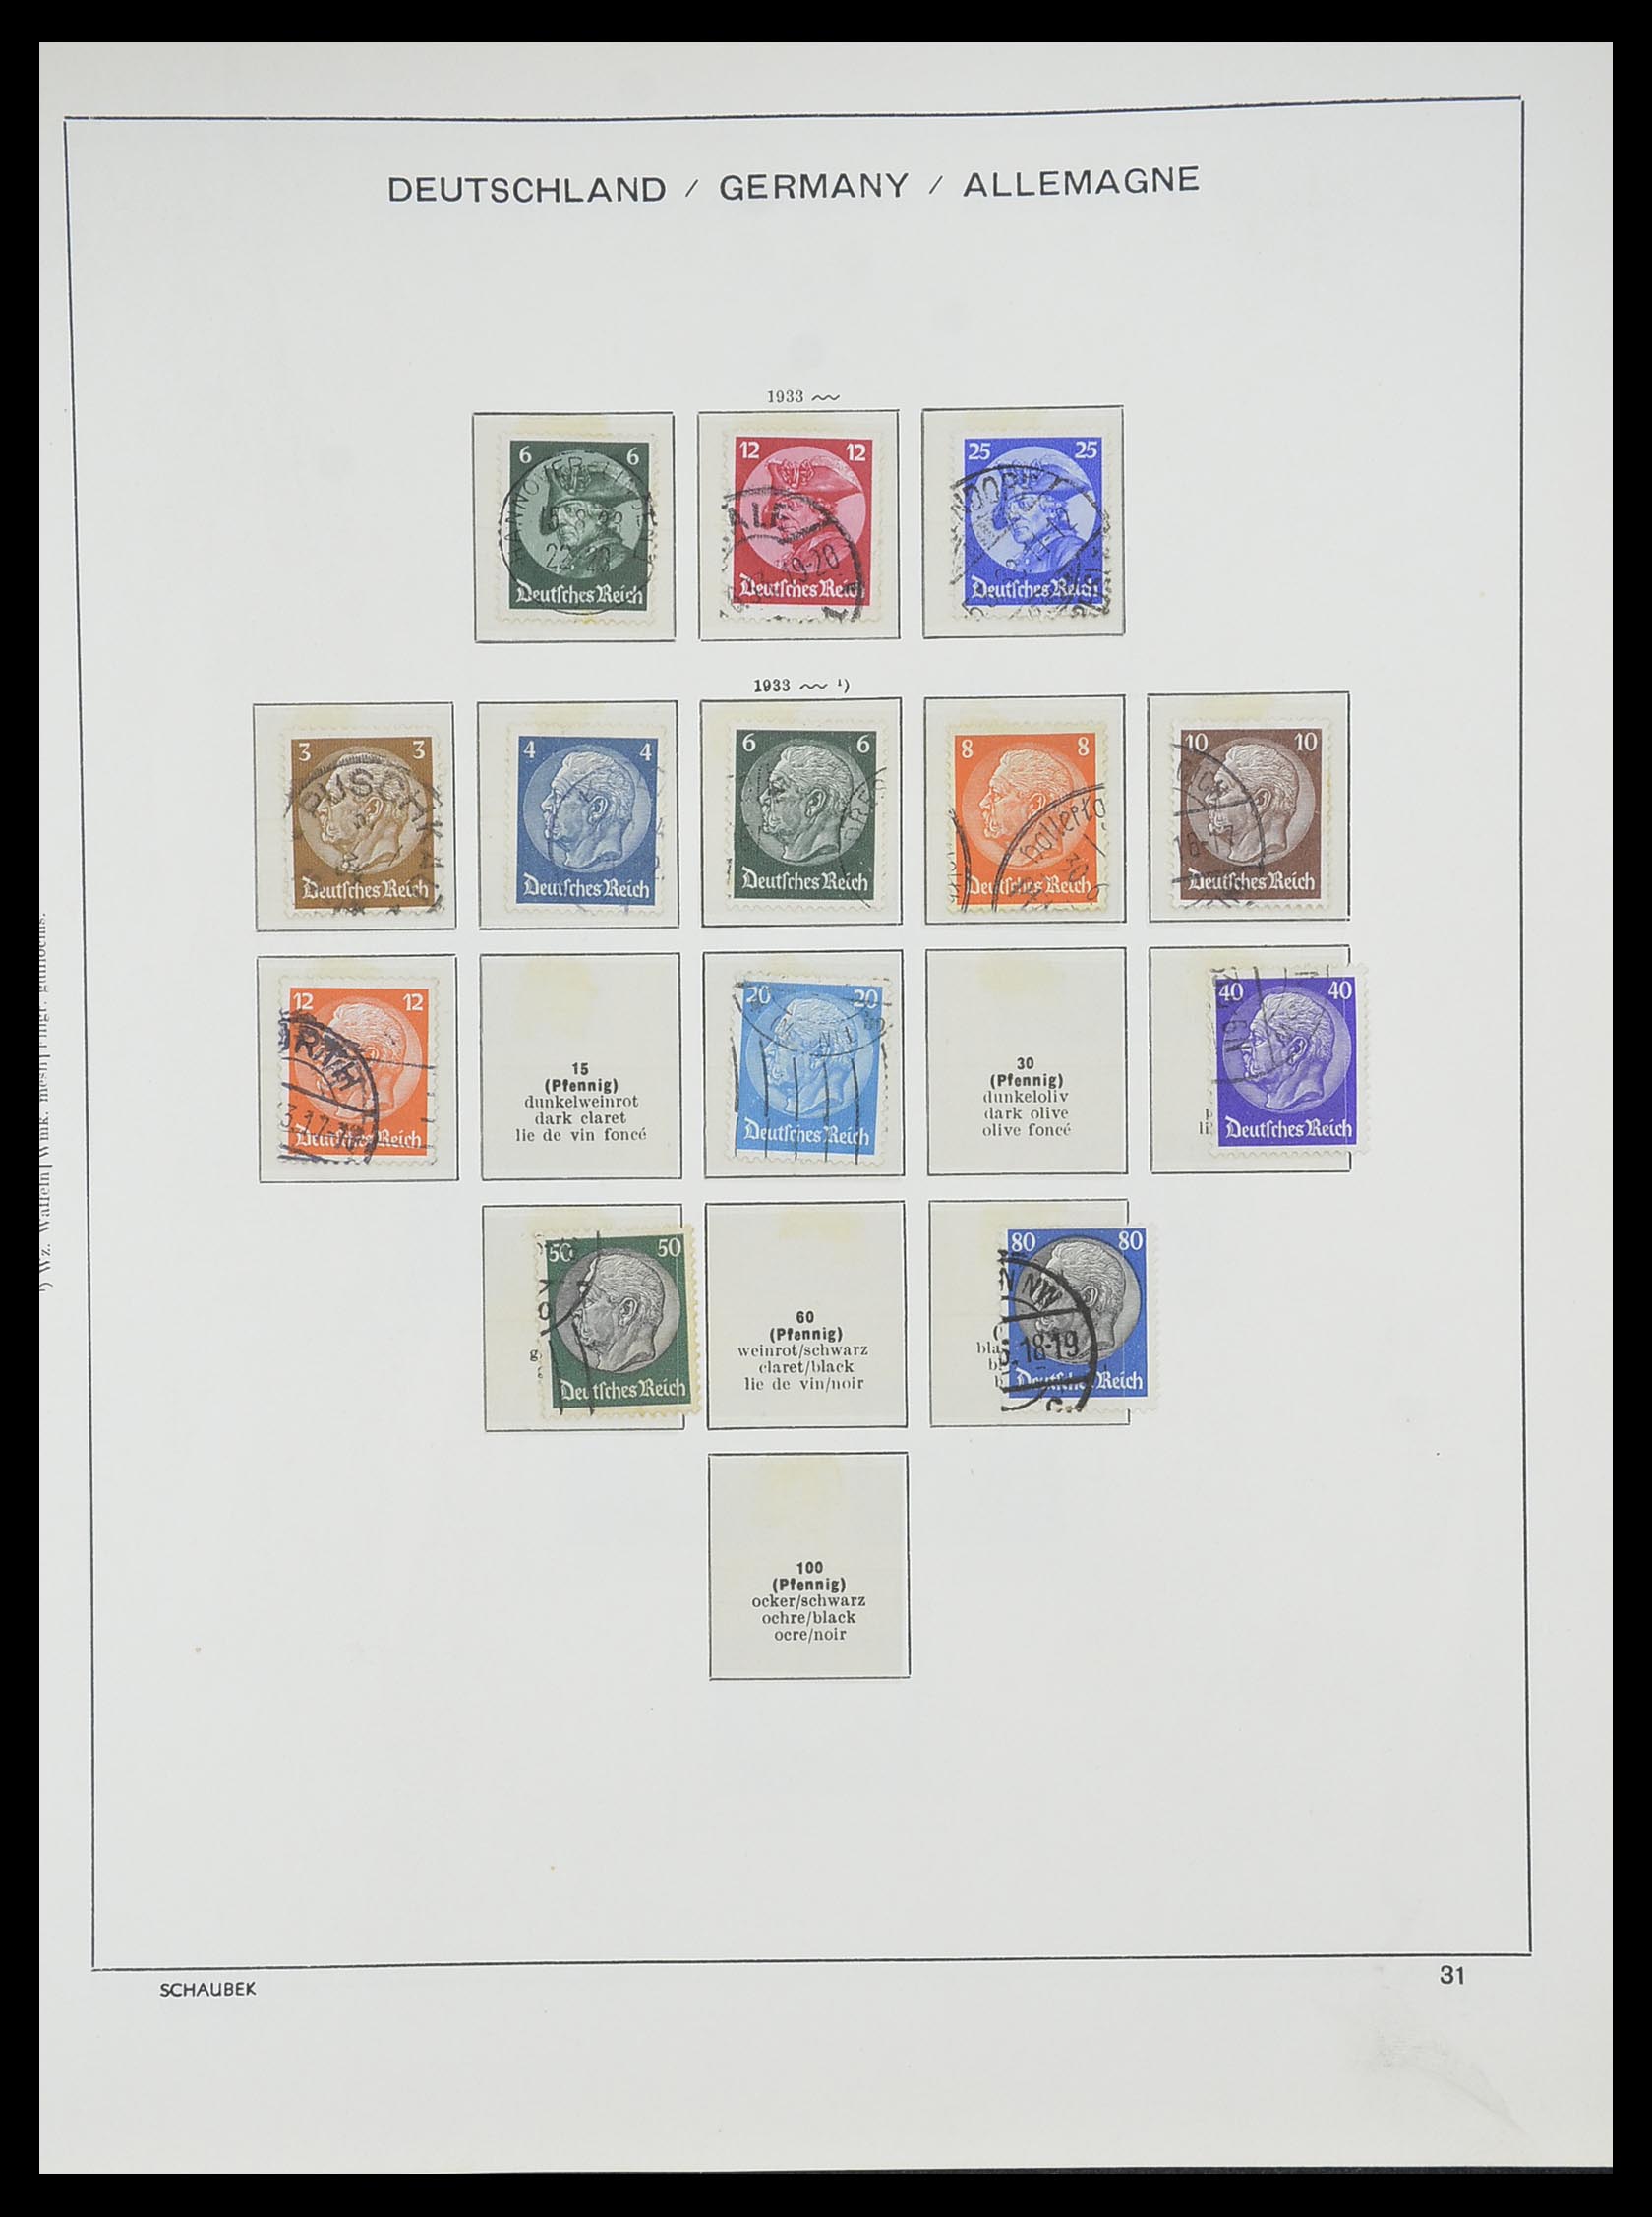 33697 029 - Stamp collection 33697 German Reich 1872-1945.